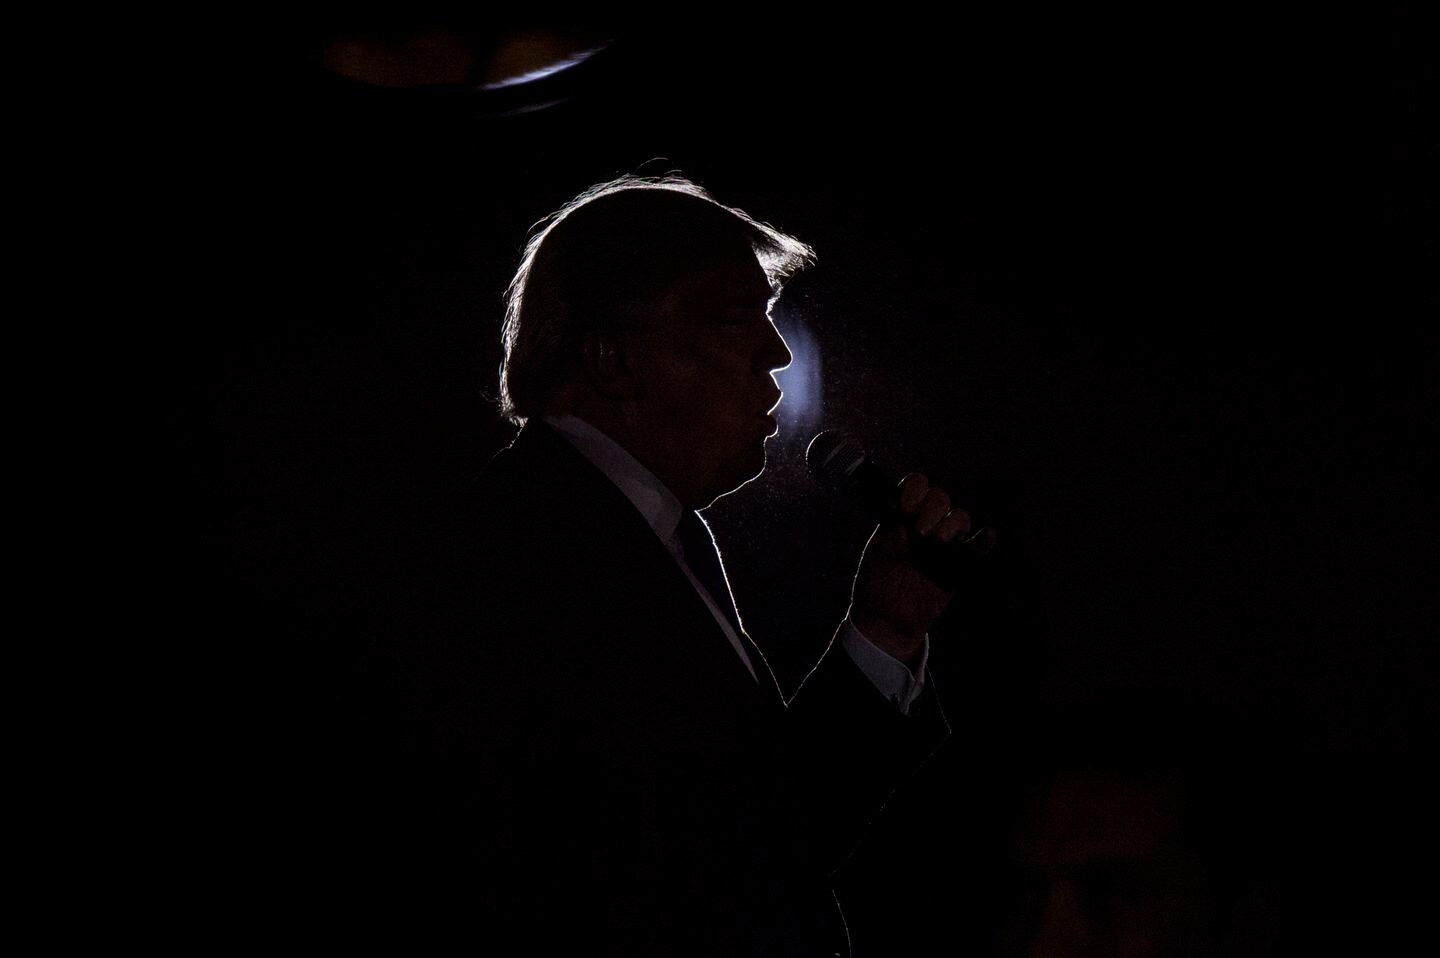 How Trump became president, through one photographer’s lens – The Washington Post